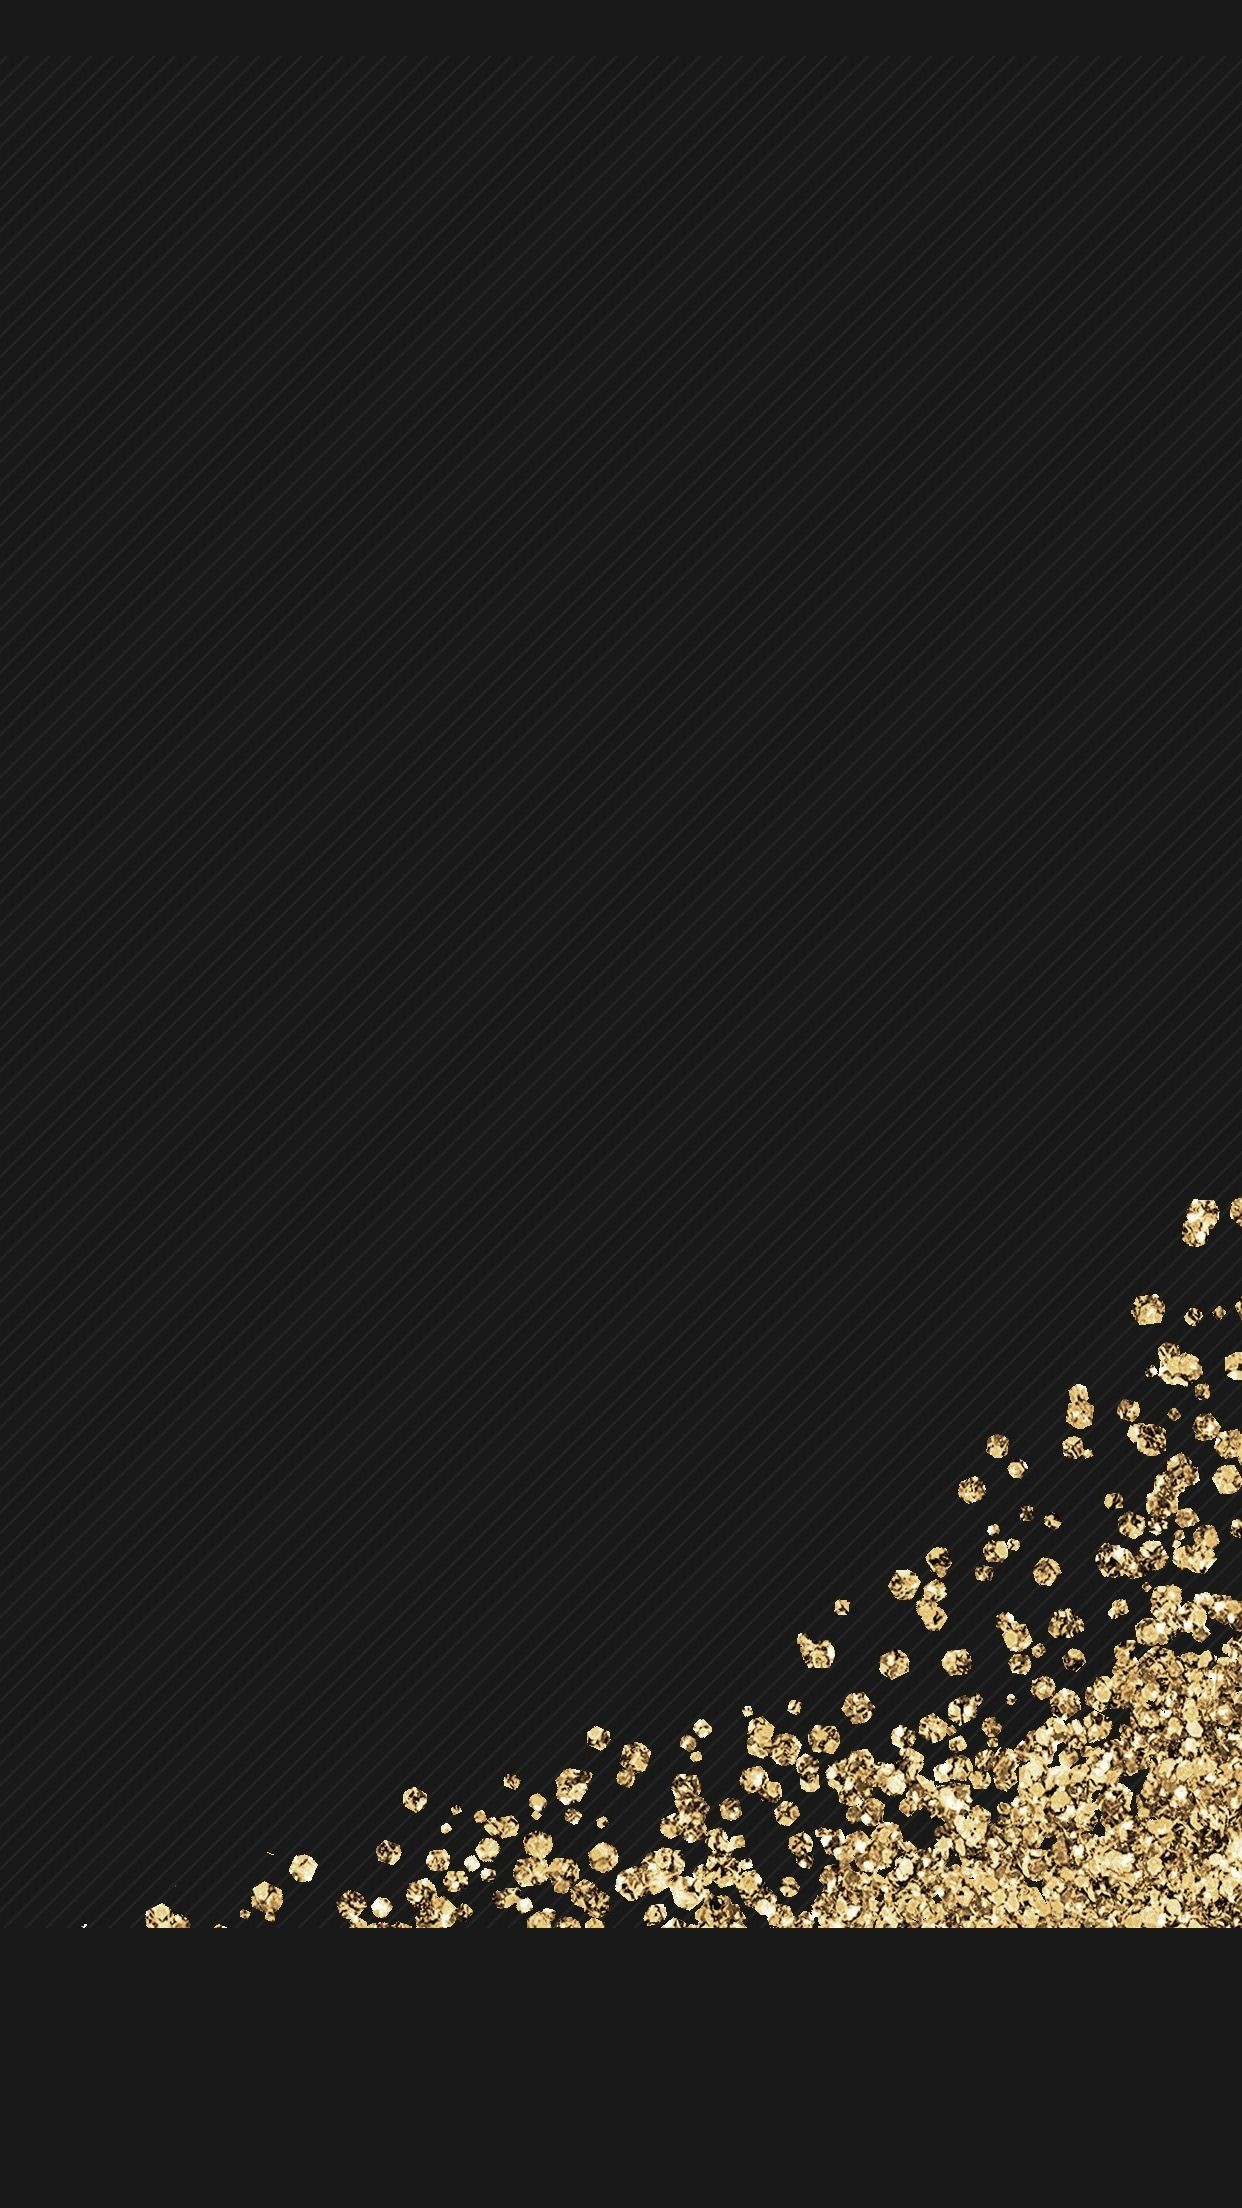 1242x2208 Sfondo Brillantinati Desktop Hd Beautiful Black Gold Glitter Wallpaper  Background iPhone android Hd